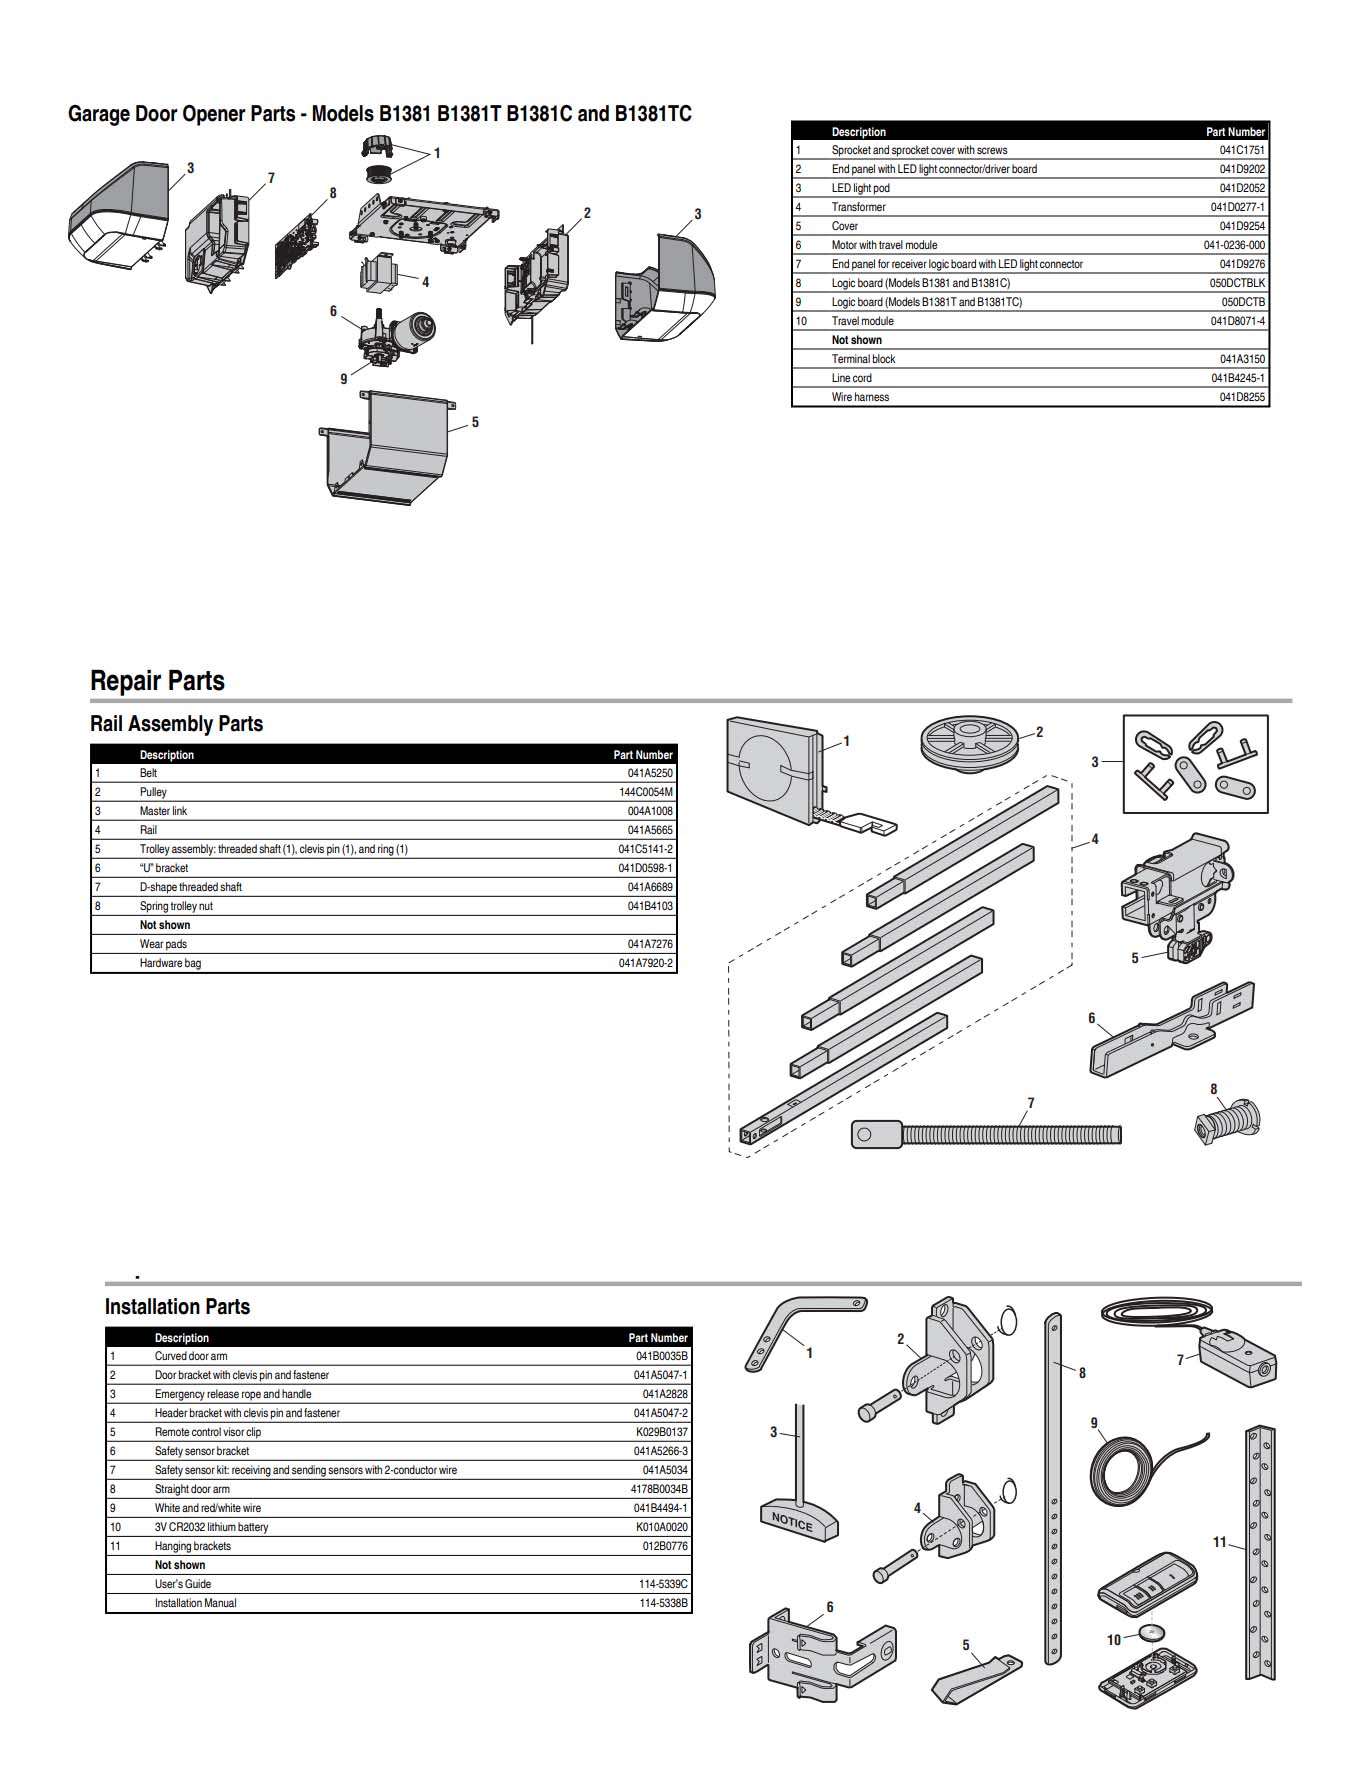 Chamberlain B1381, B1381T, B1381C and B1381TC Garage Door Opener Parts Diagram and List